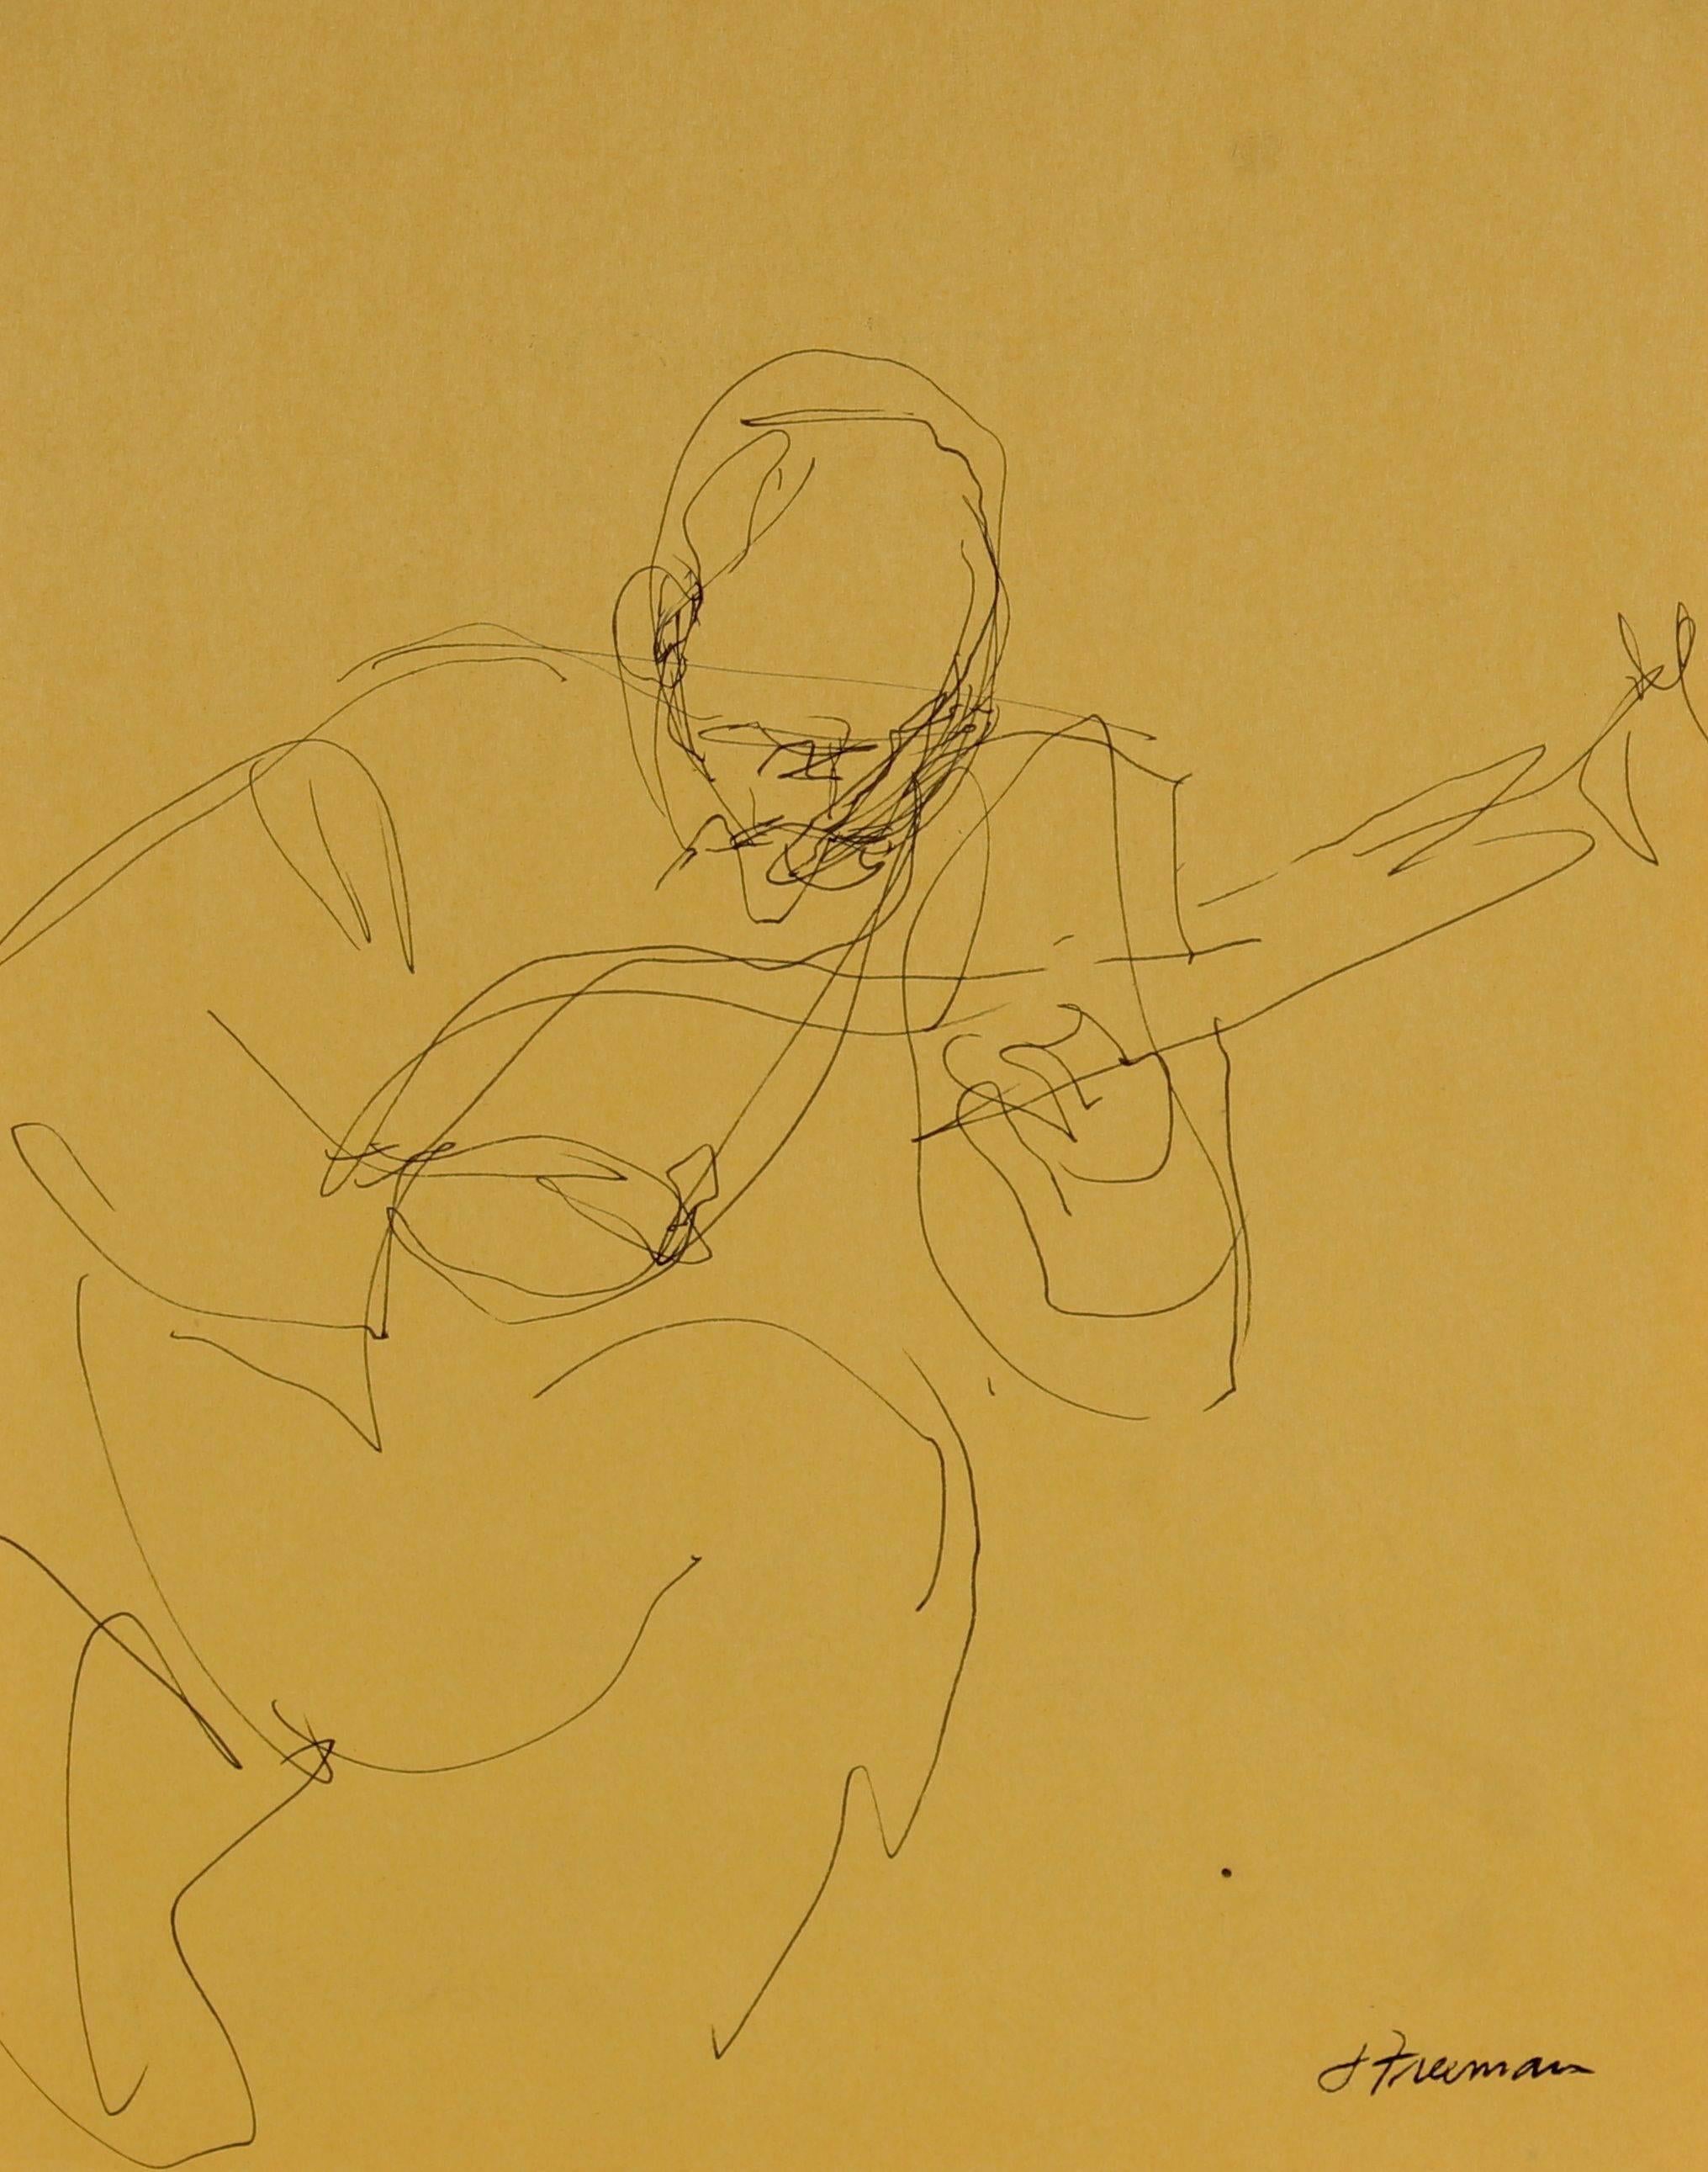 Jack Freeman Figurative Art - Guitar Player Sketch in Yellow